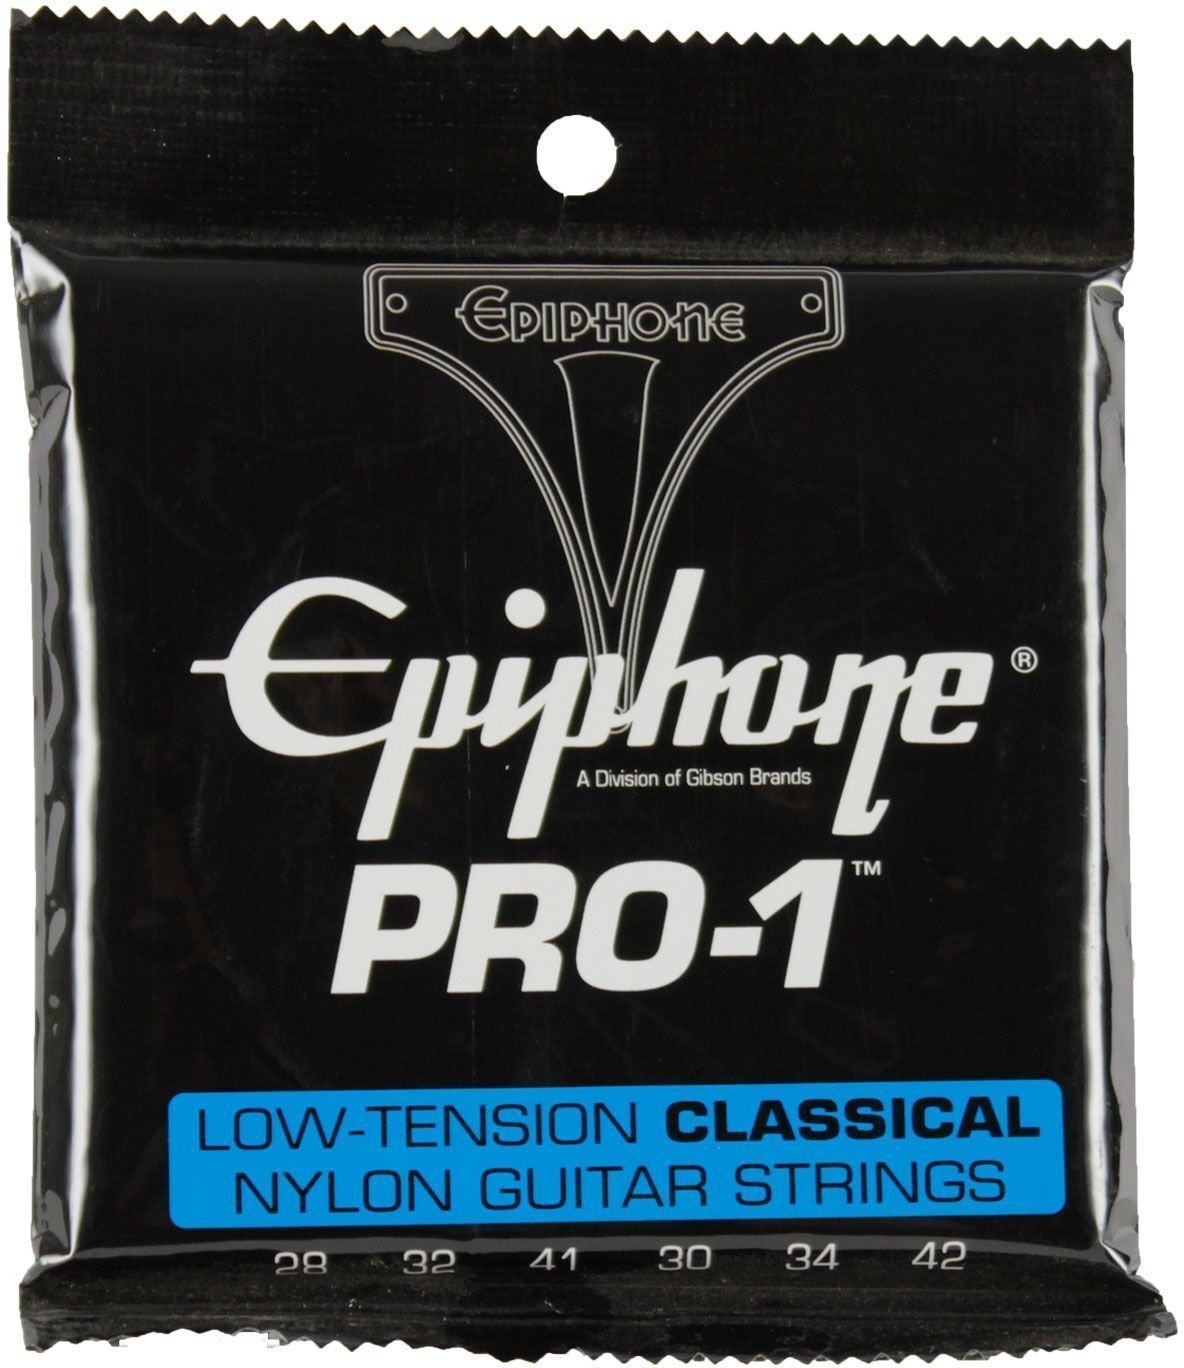 Cordas de nylon Epiphone Pro-1 Ultra-Light Classical Strings